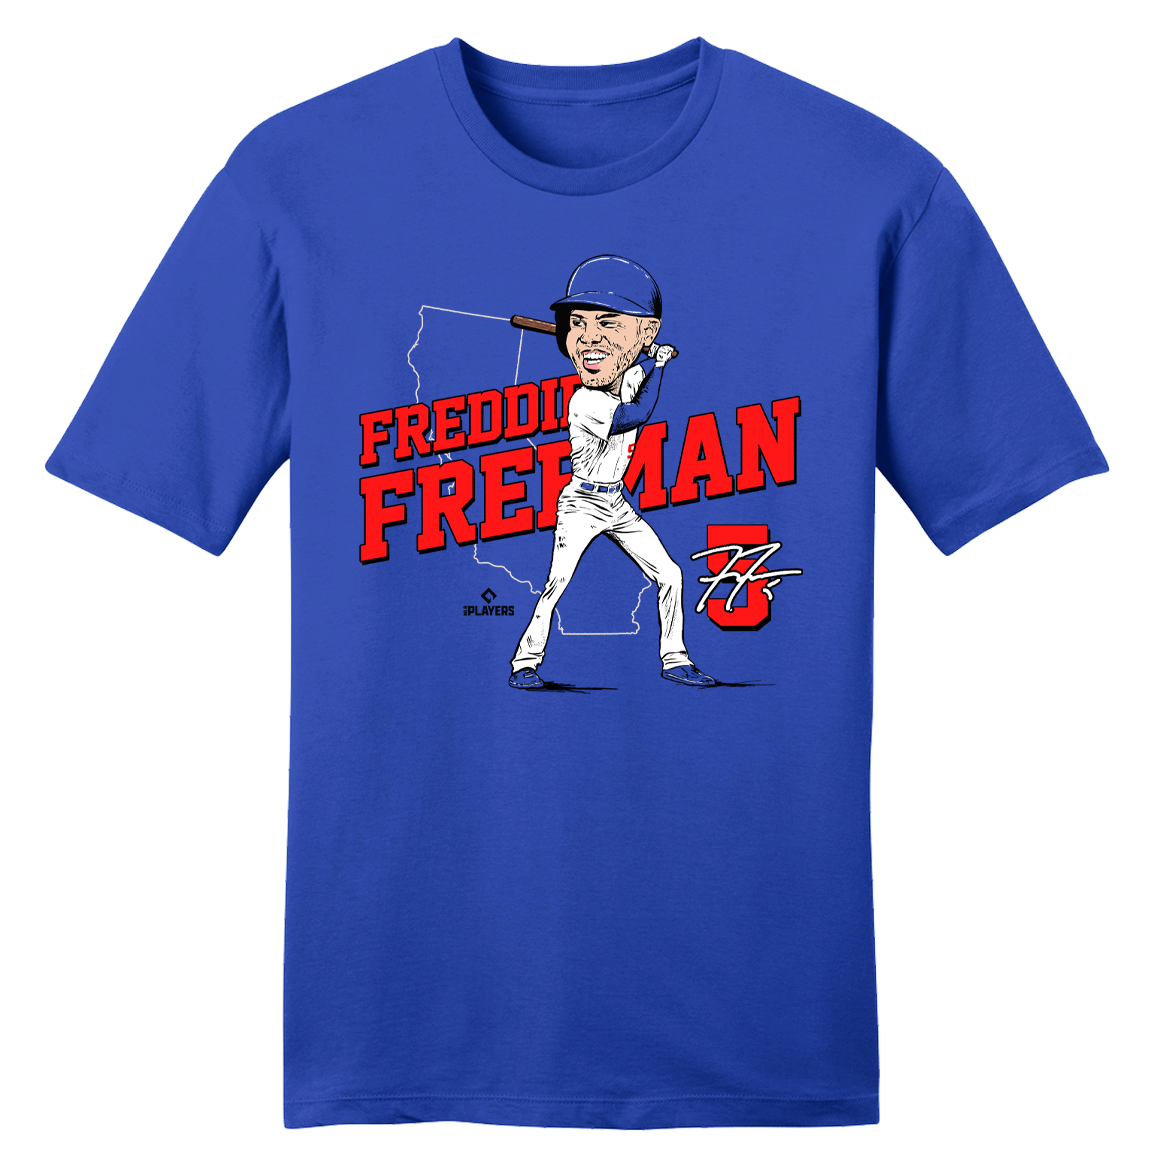 Freddie Freeman Official MLBPA Tee, LA Baseball Gear